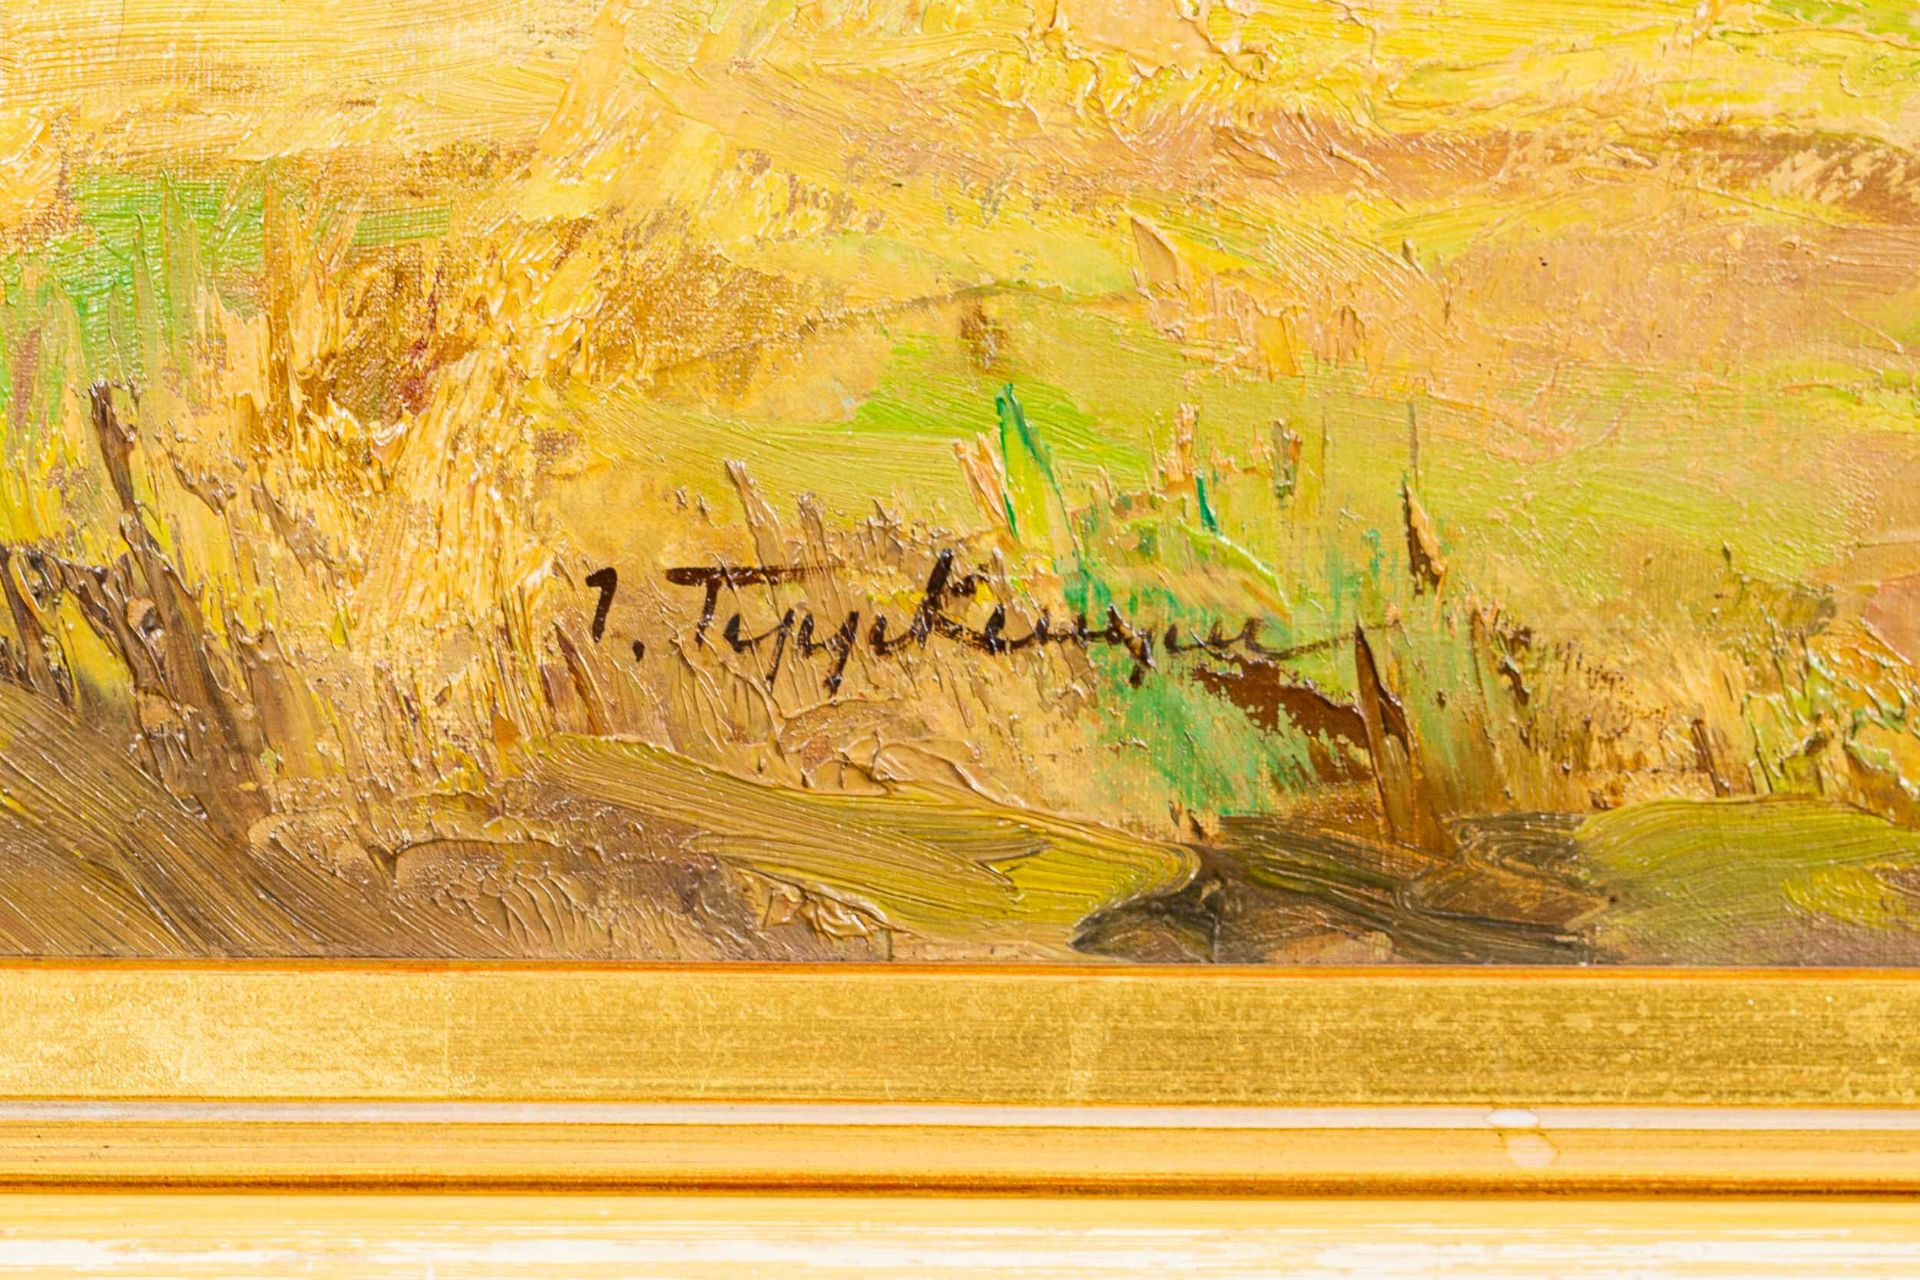 "Parforcejagd", Gemälde Öl auf Leinwand, ca. 60 x 70 cm, unten links sign.: "Ti - Bild 3 aus 6